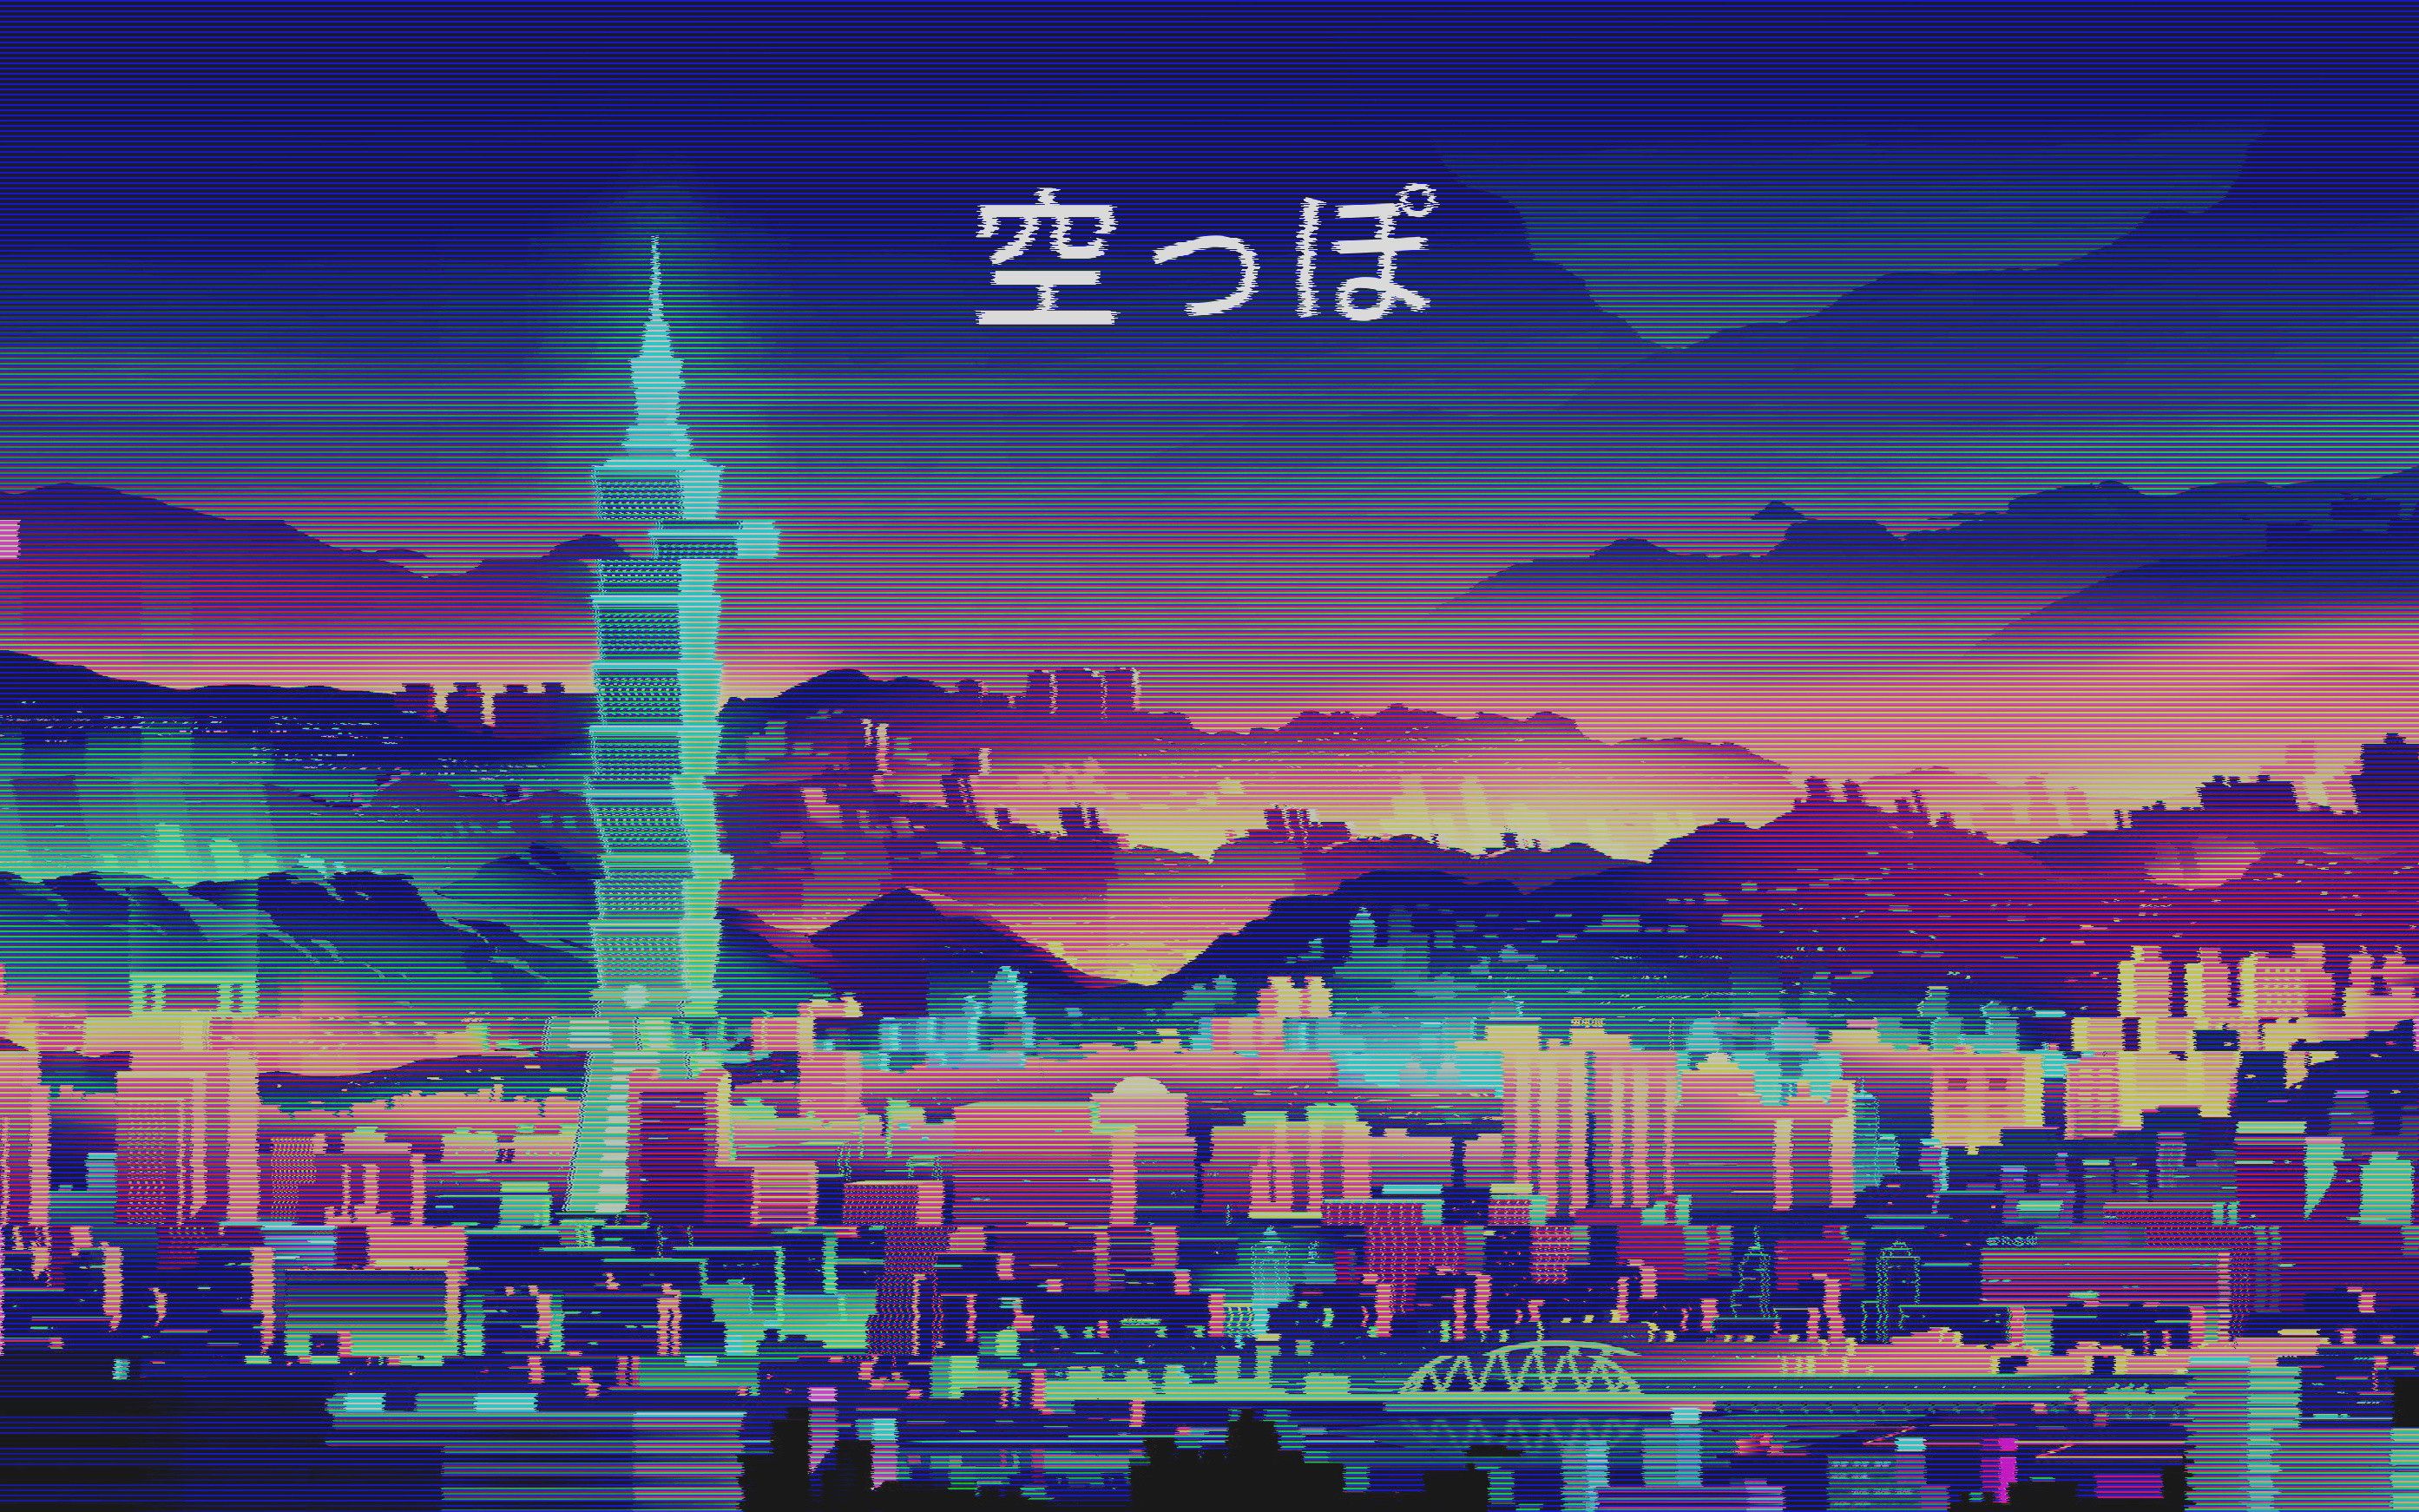  Anime Hintergrundbild 2787x1742. Aesthetic Anime City Wallpaper Free Aesthetic Anime City Background